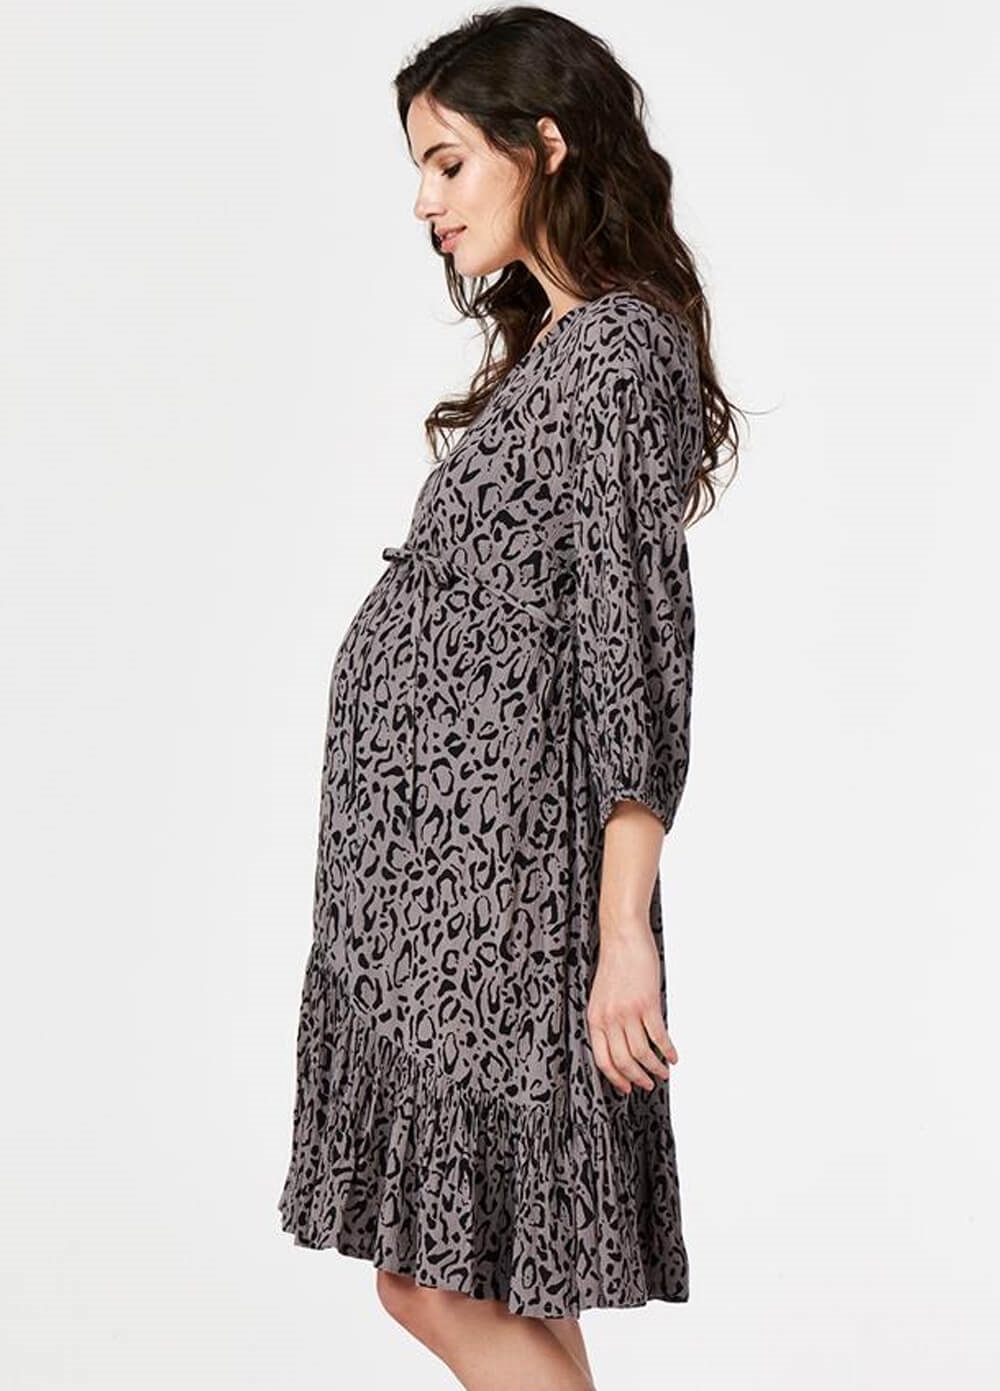 Supermom - Leopard Print Maternity Dress | Queen Bee